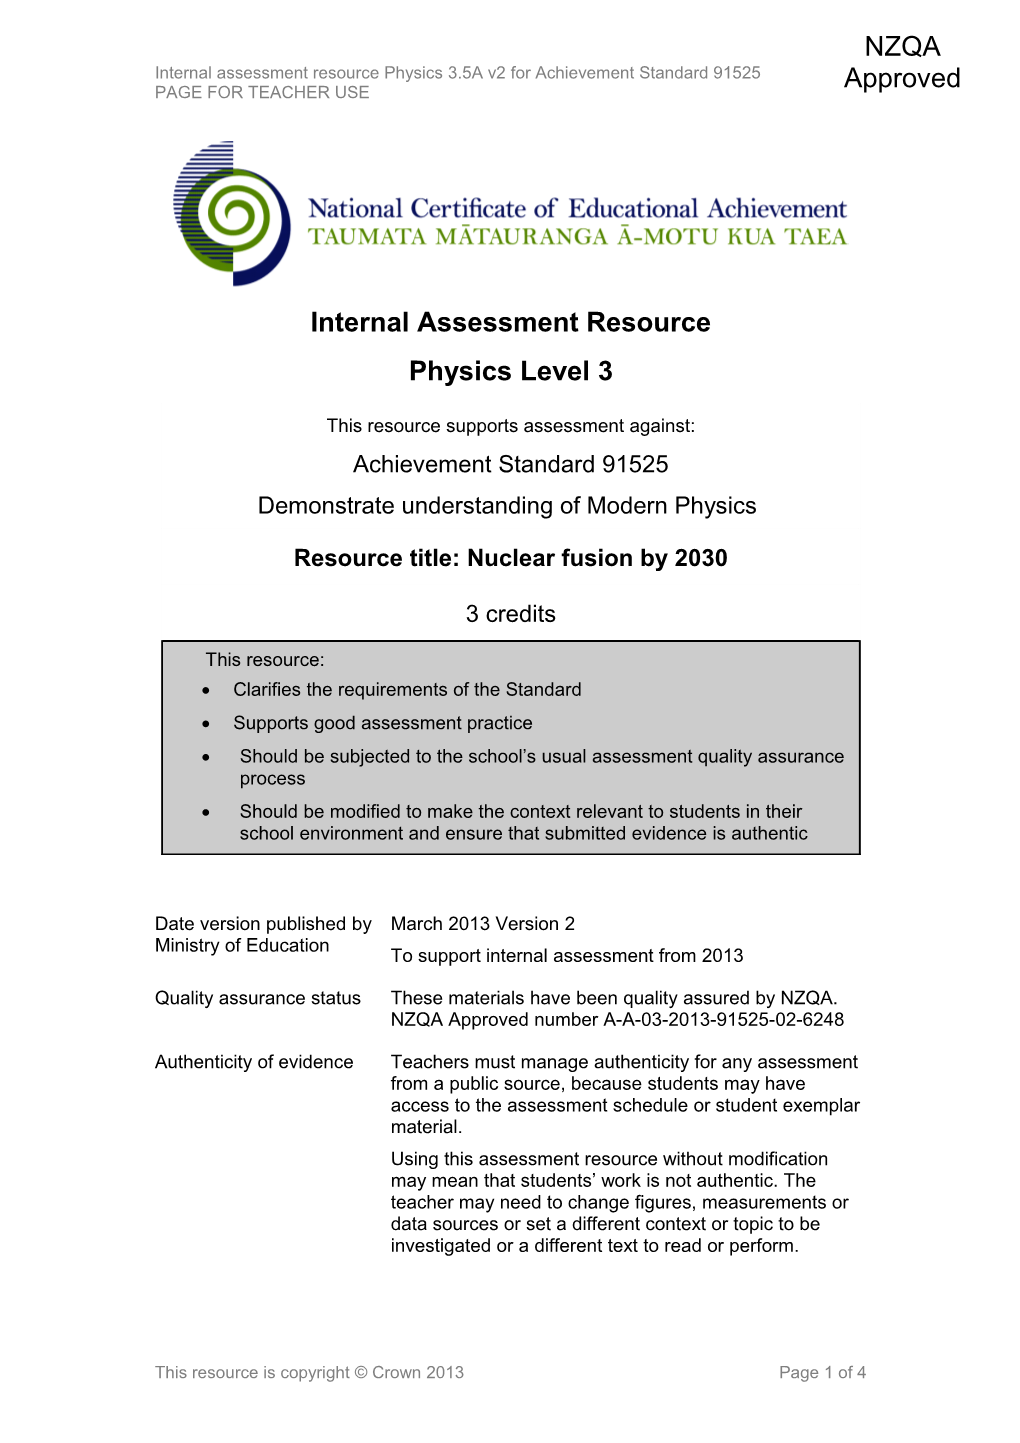 Level 3 Physics Internal Assessment Resource